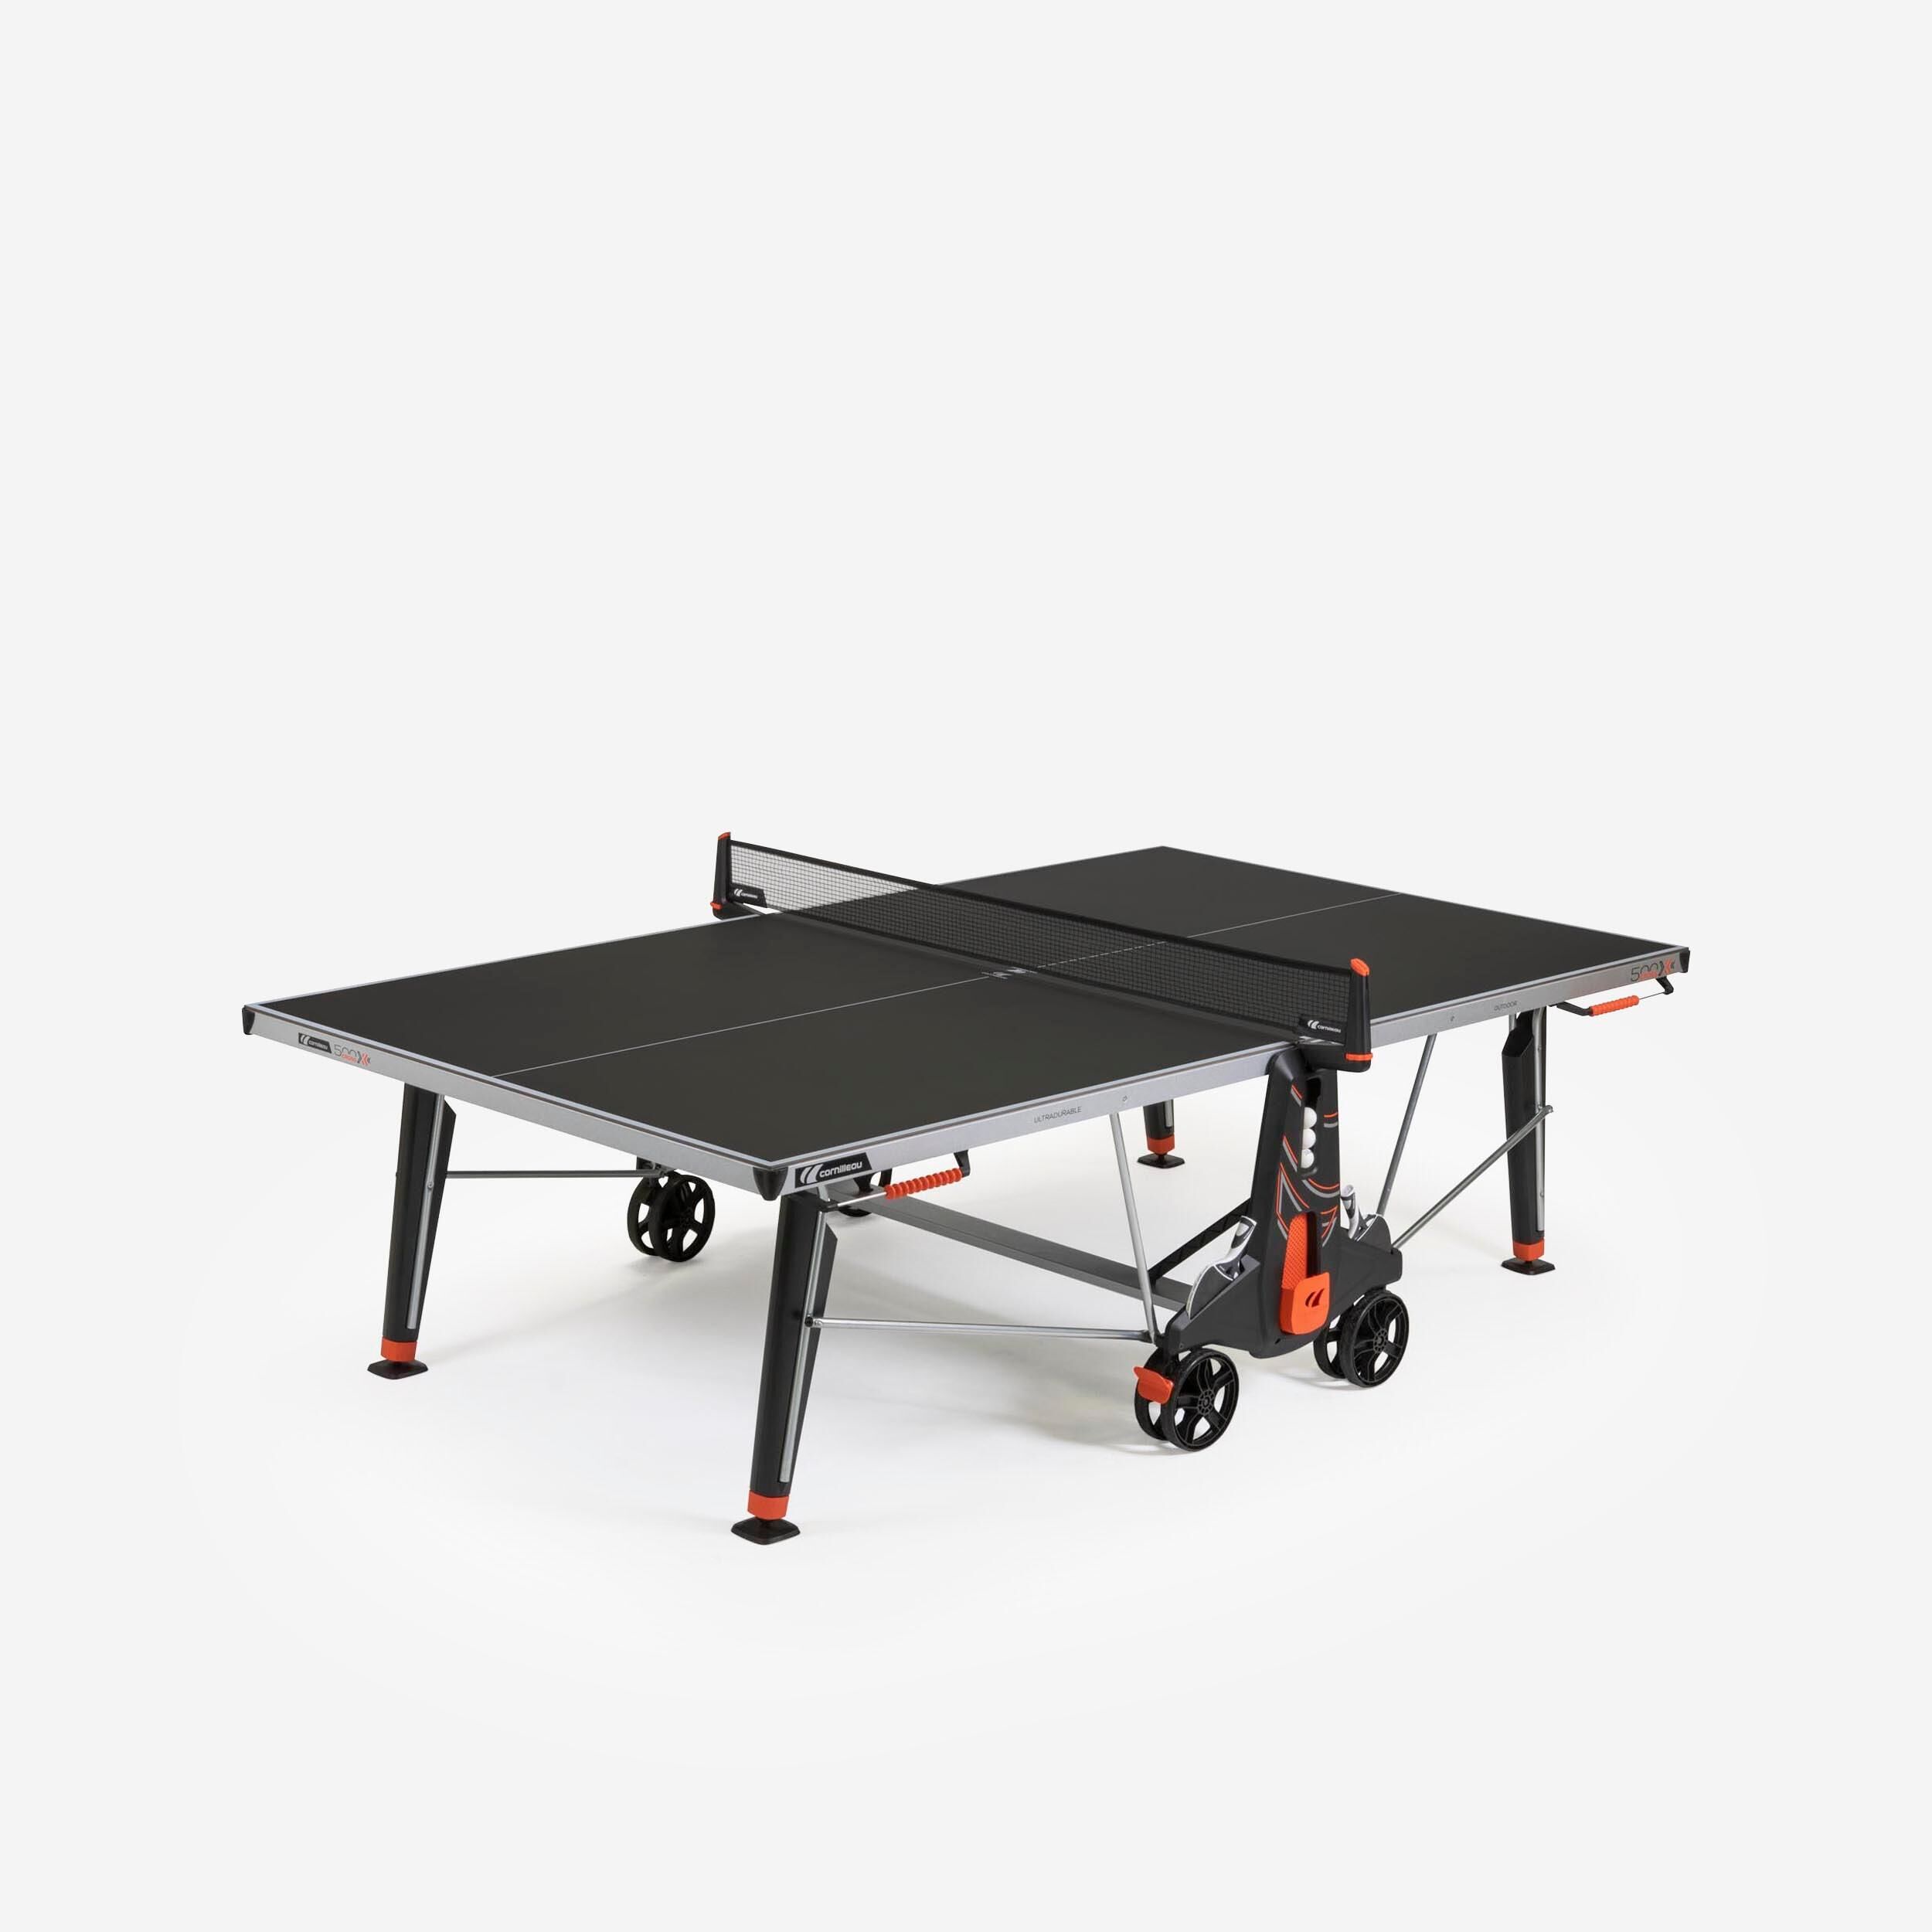 CORNILLEAU Outdoor Table Tennis Table 500X - Black